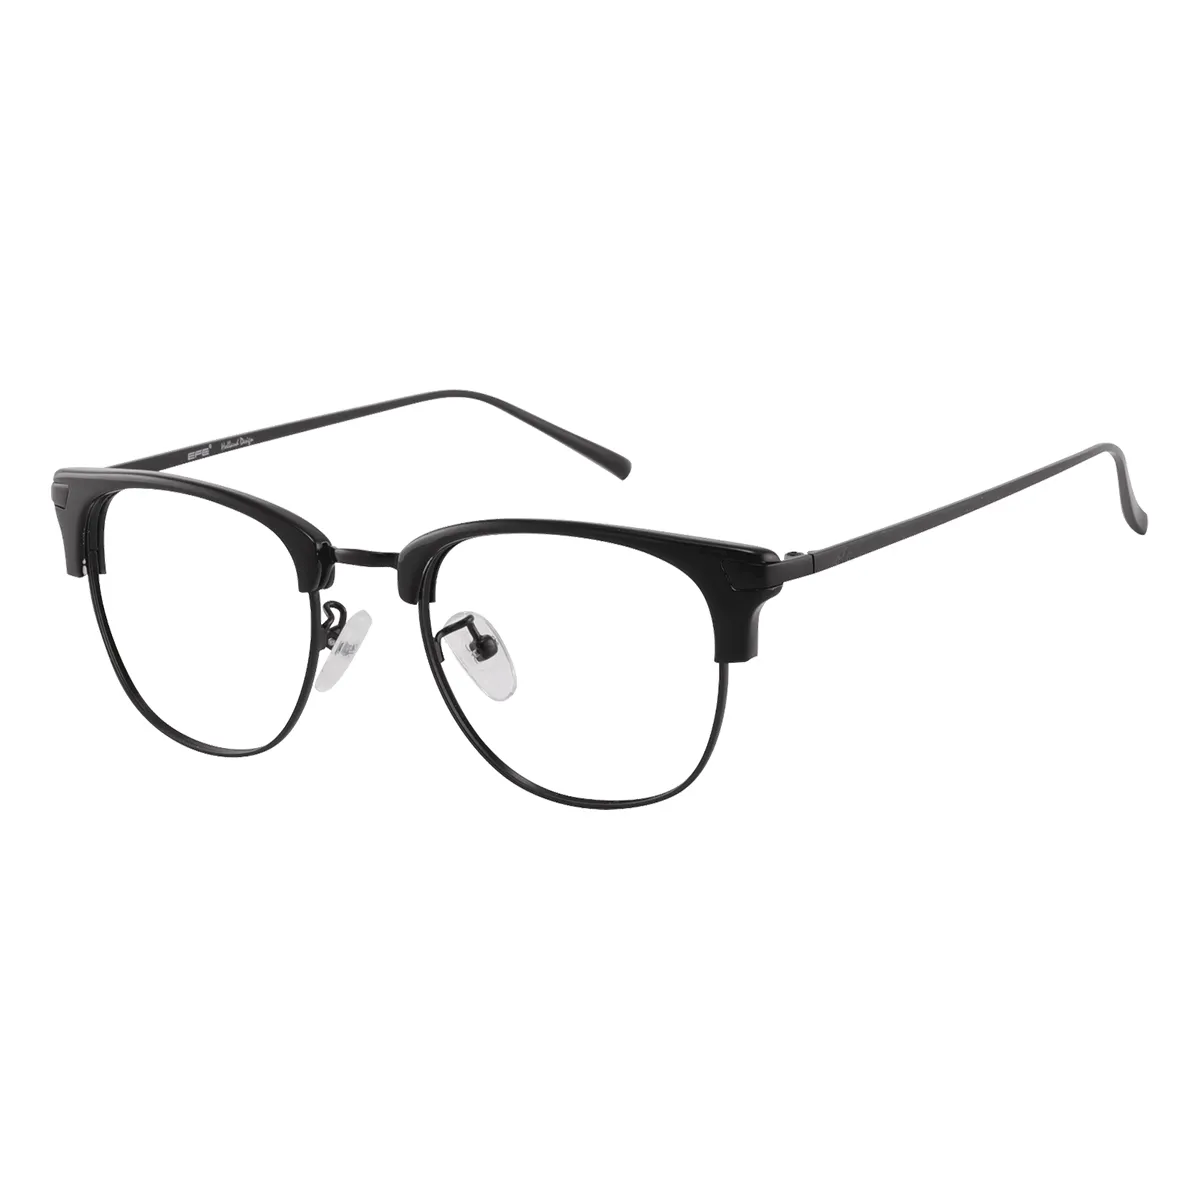 Fashion Browline Black Reading Glasses for Women & Men